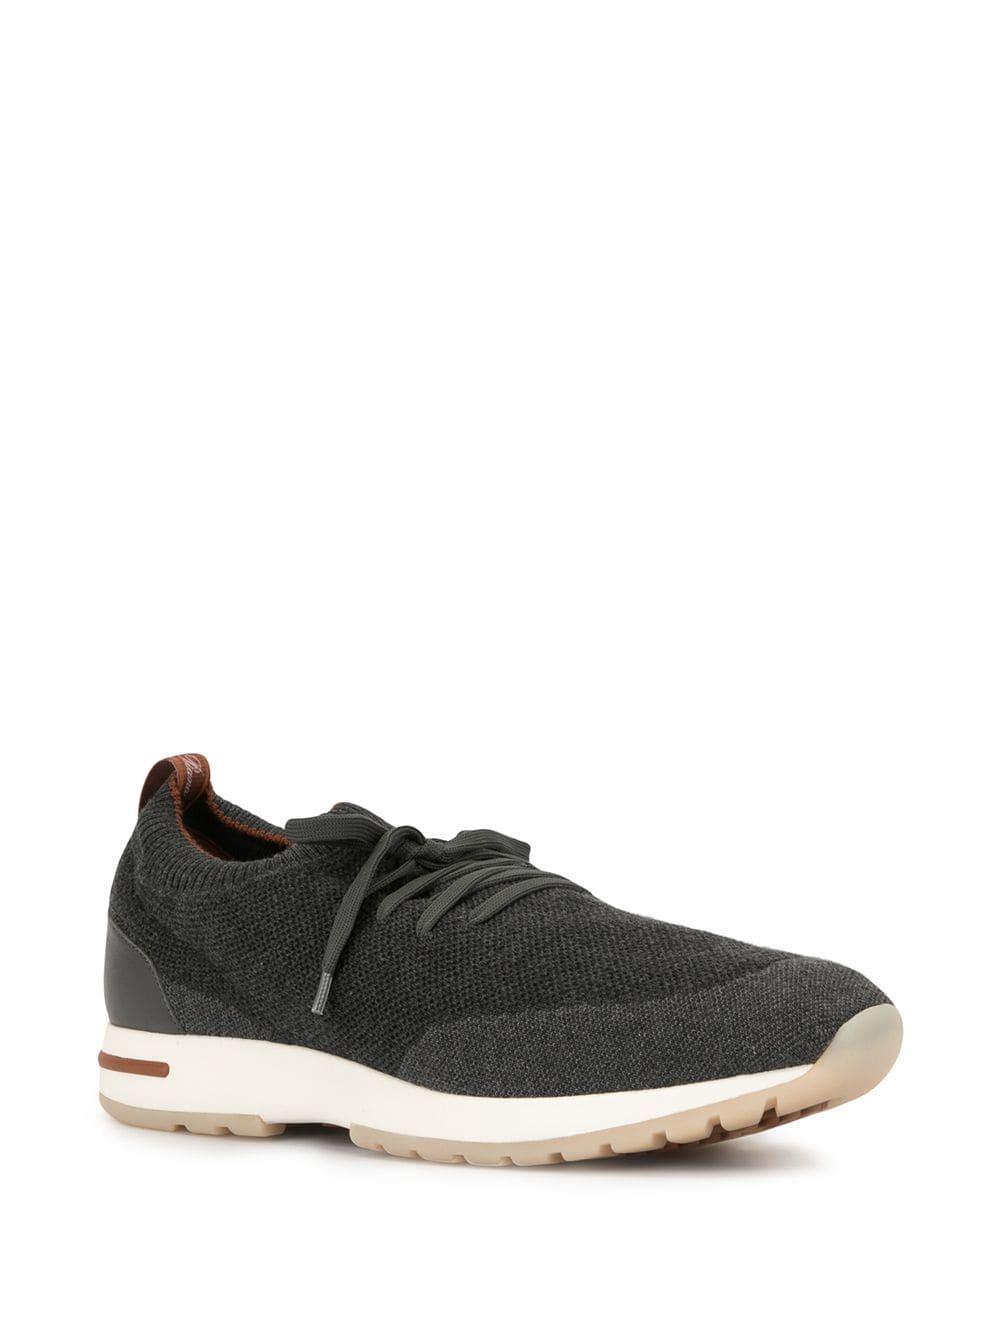 Loro Piana Cotton 360 Lp Flexy Walk Sneakers in Grey (Gray) for Men - Lyst